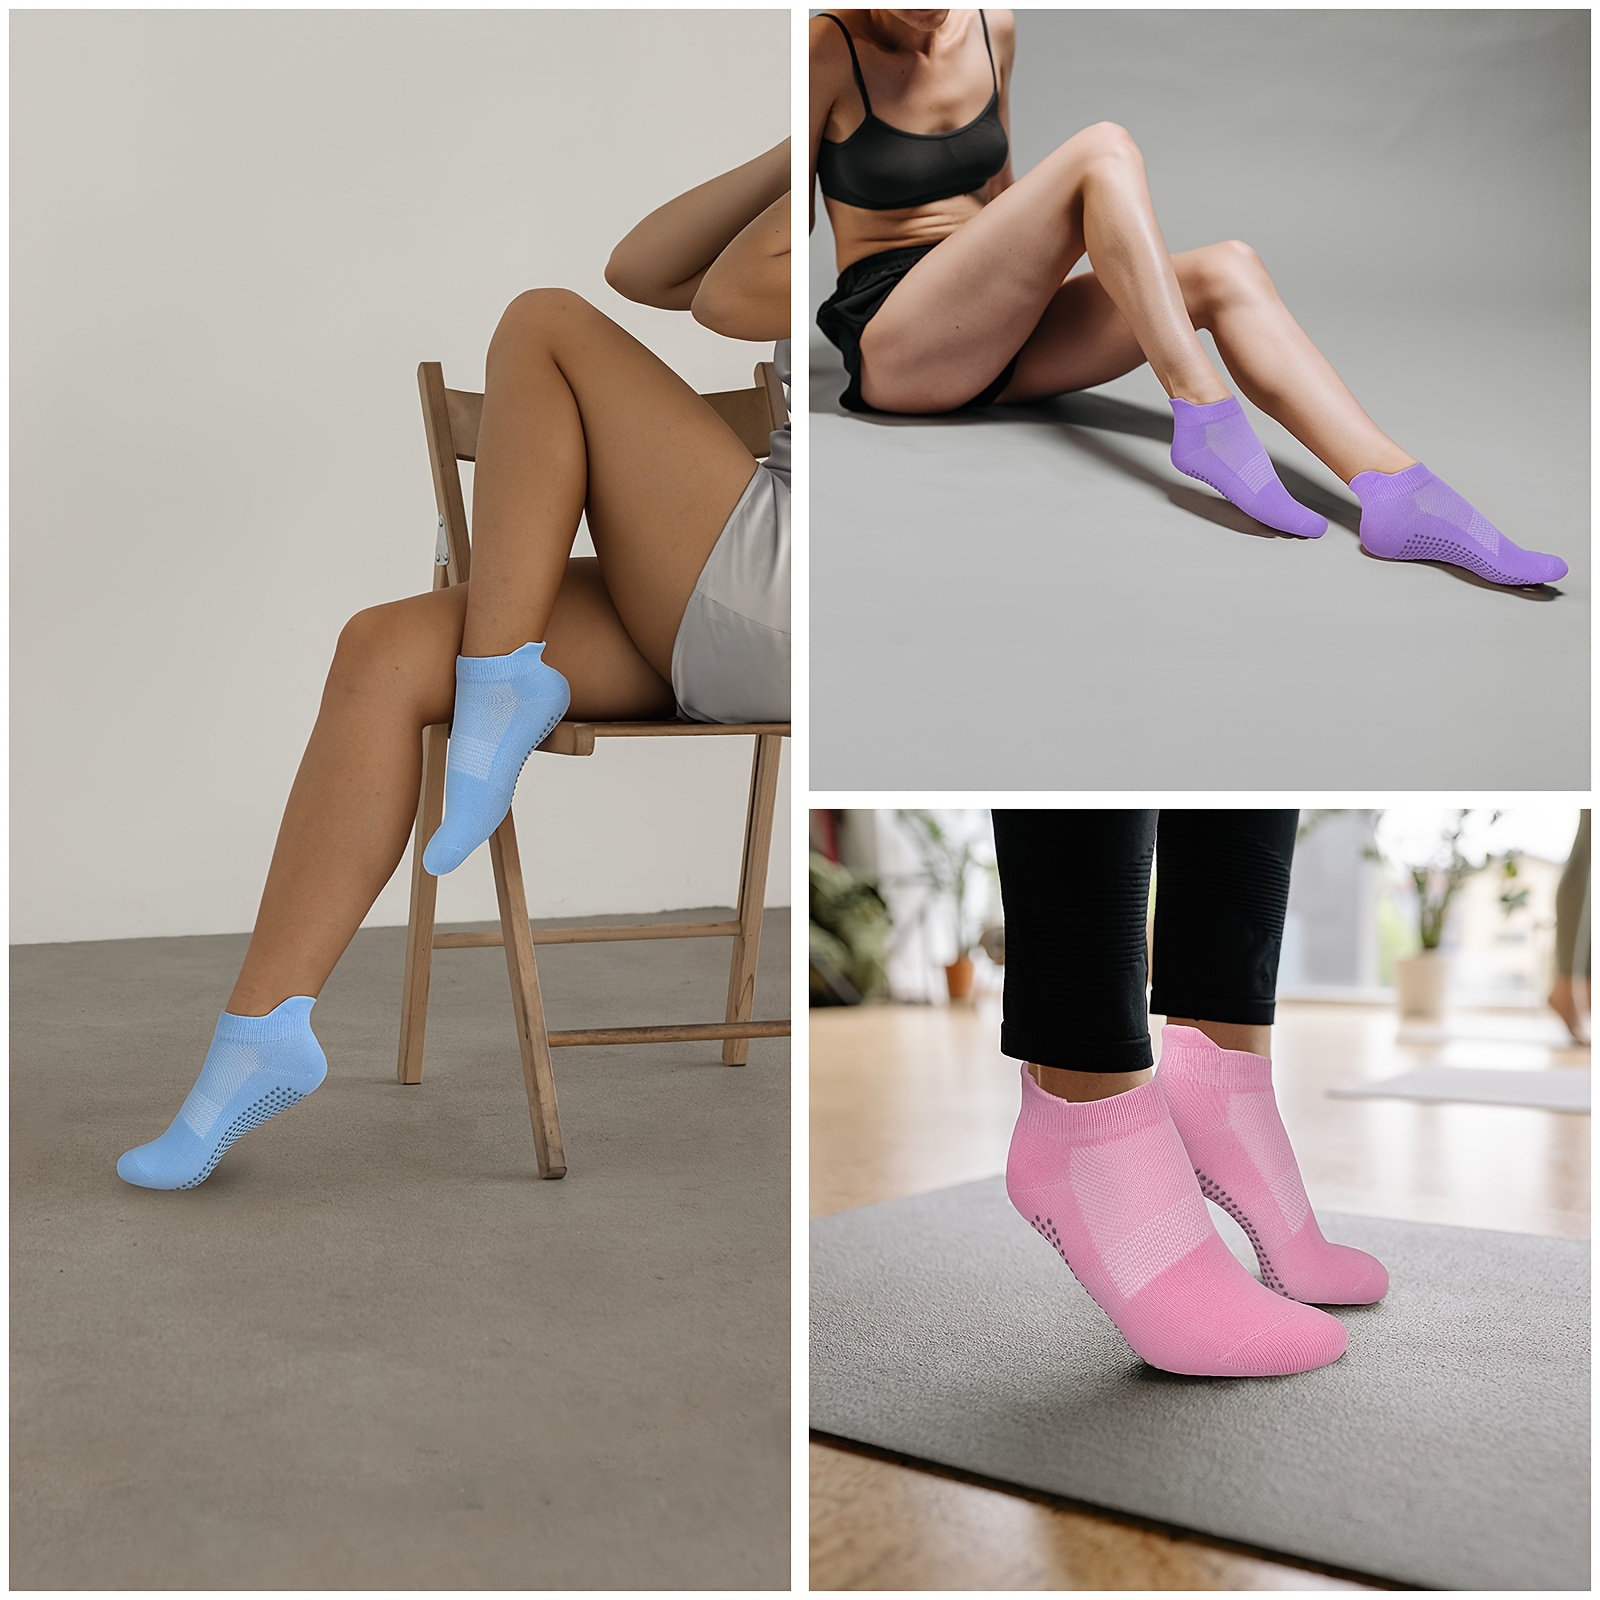 2 Pairs / 4 Pairs Non Slip Grip Dance Socks Yoga Socks Compatible